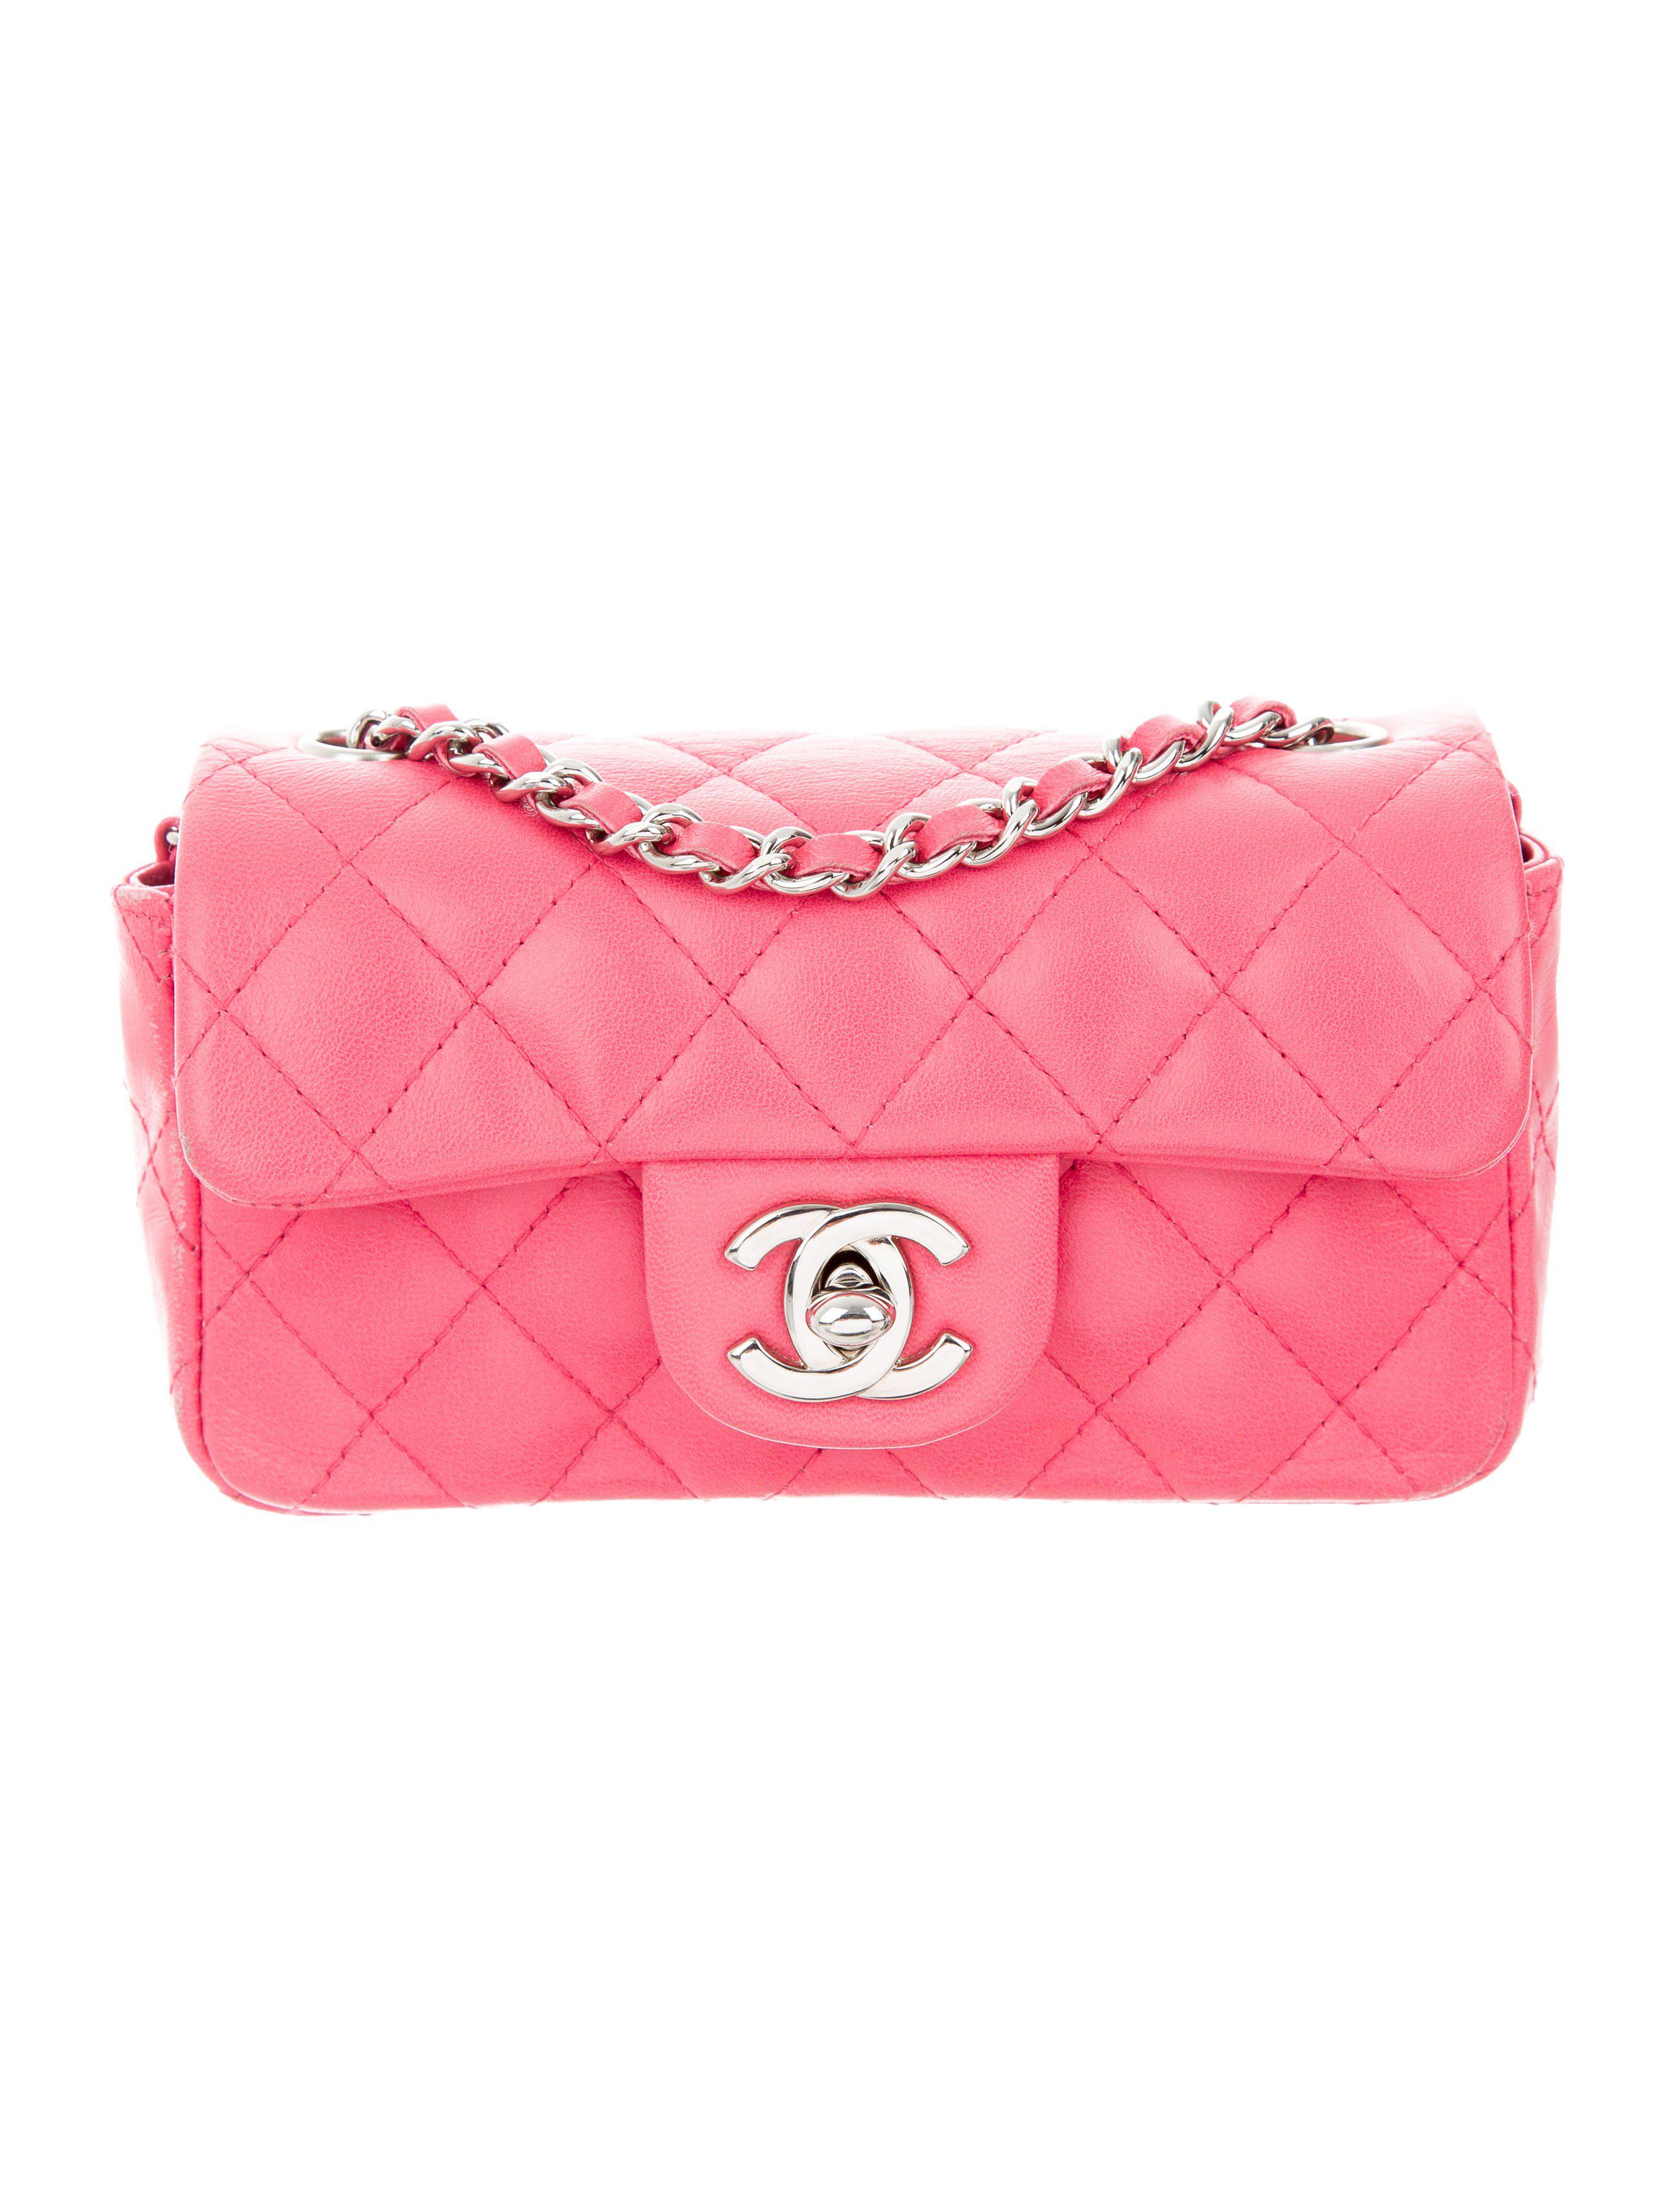 Chanel Classic Handbag Pink | semashow.com